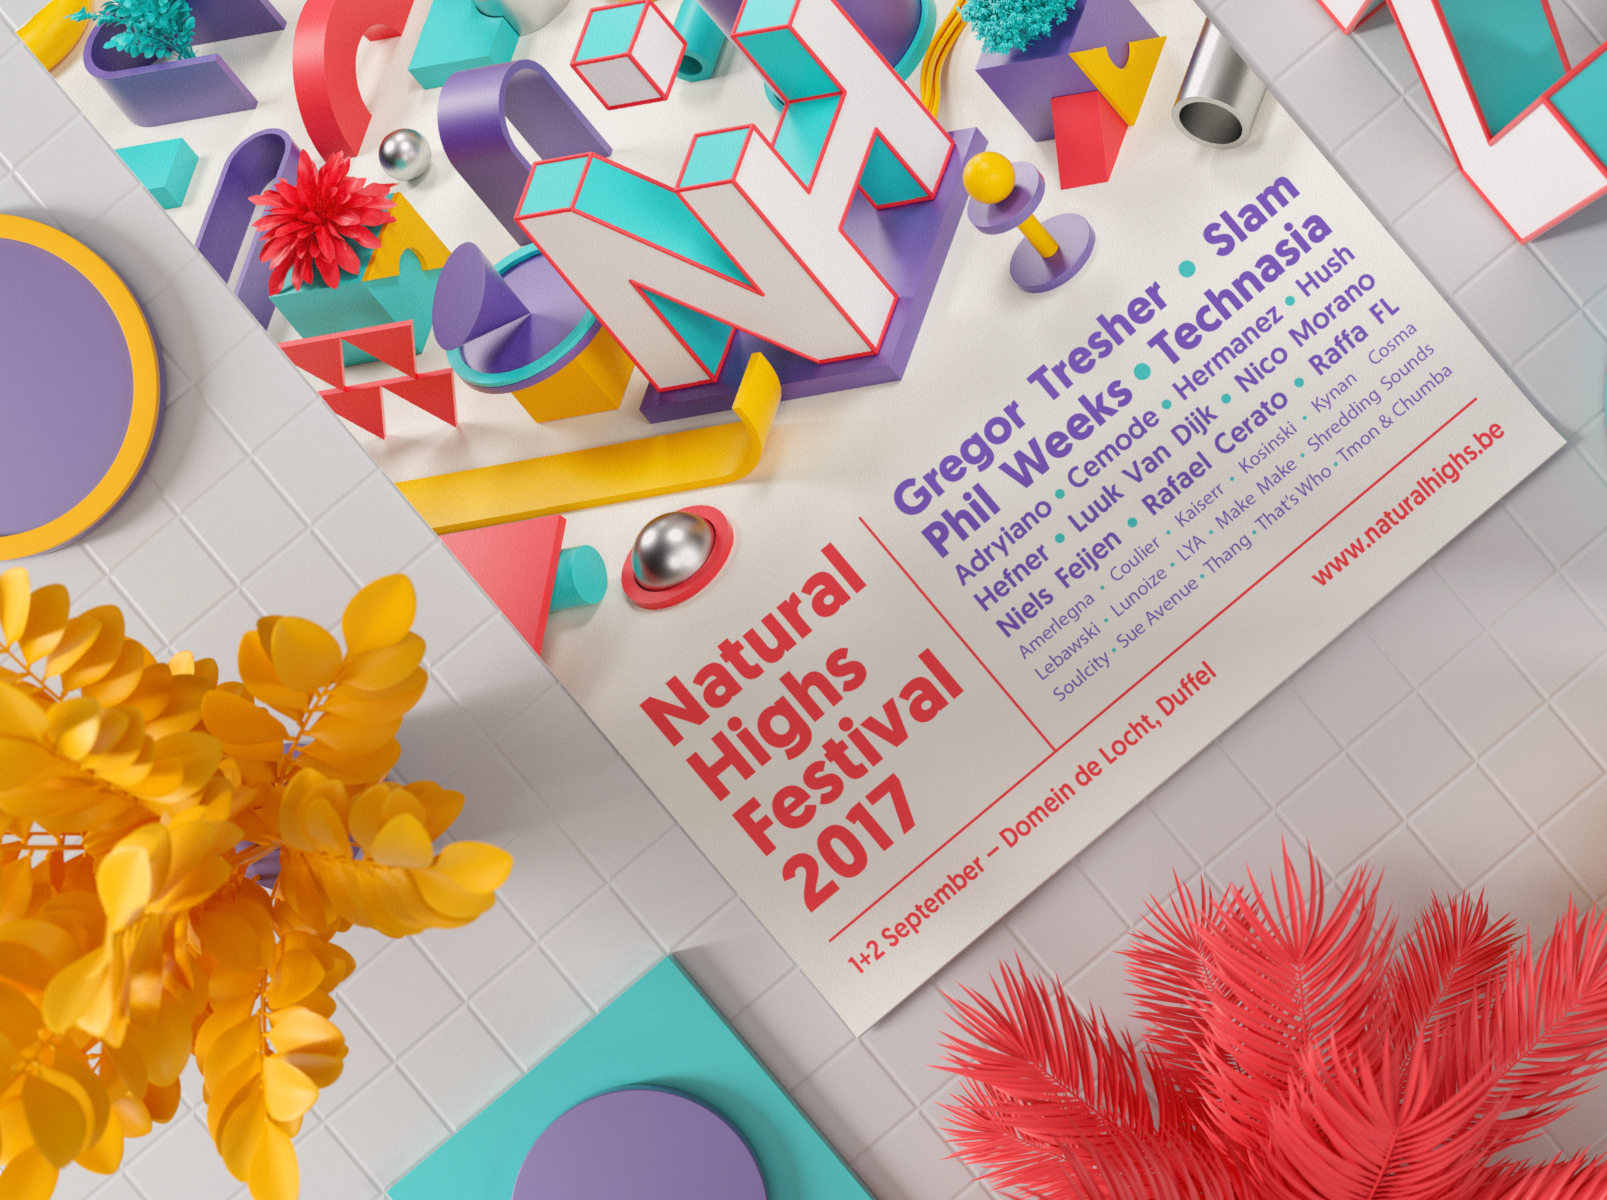 Graphic Design & 3D - Natural Highs Festival - Serafim Mendes